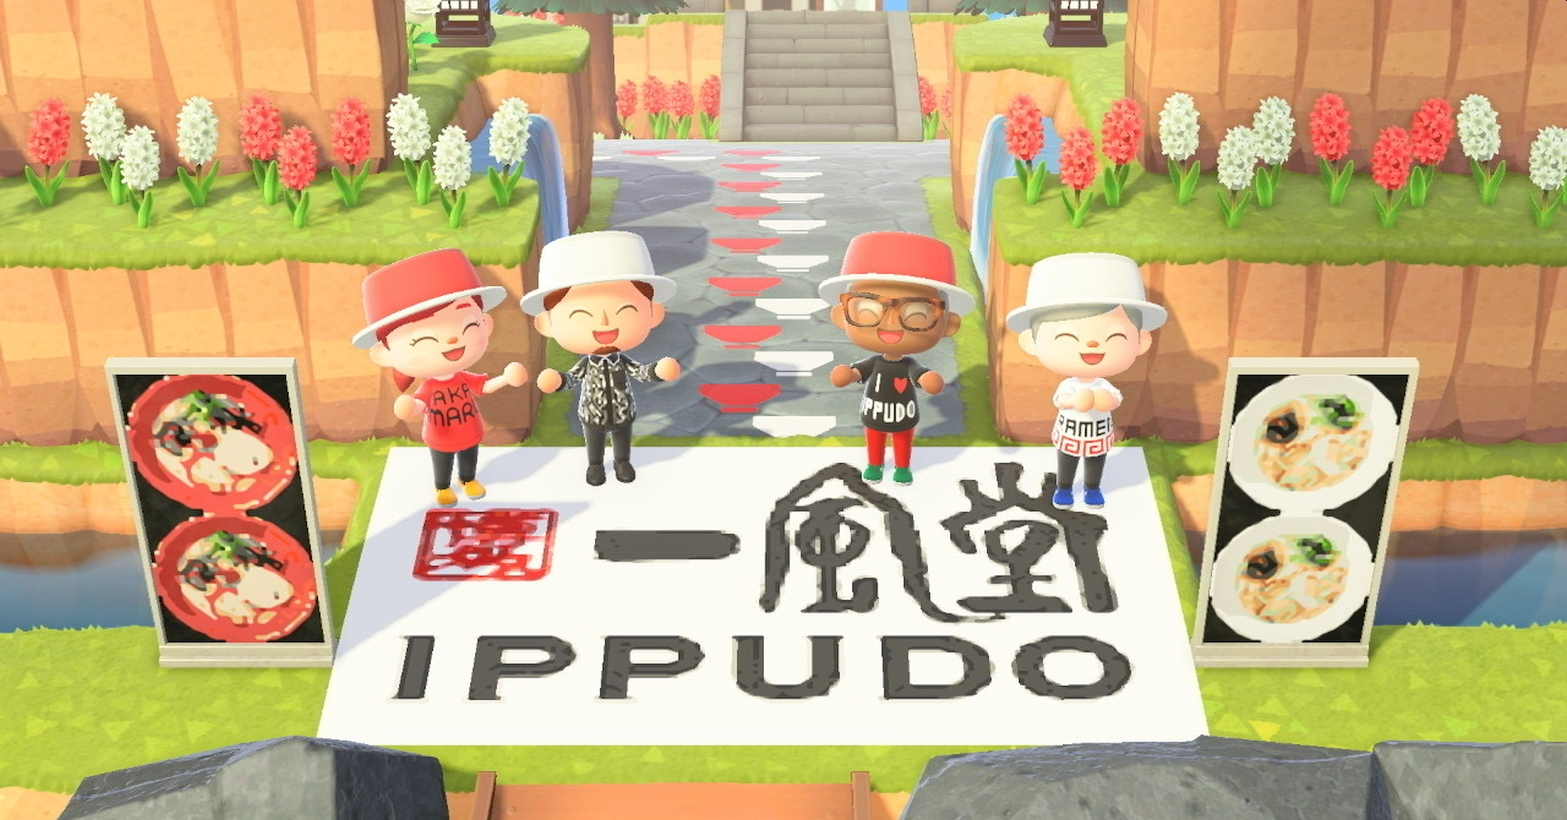 Ippudo Ramen Restaurant Sets Up Virtual Shop In Animal Crossing: New Horizons